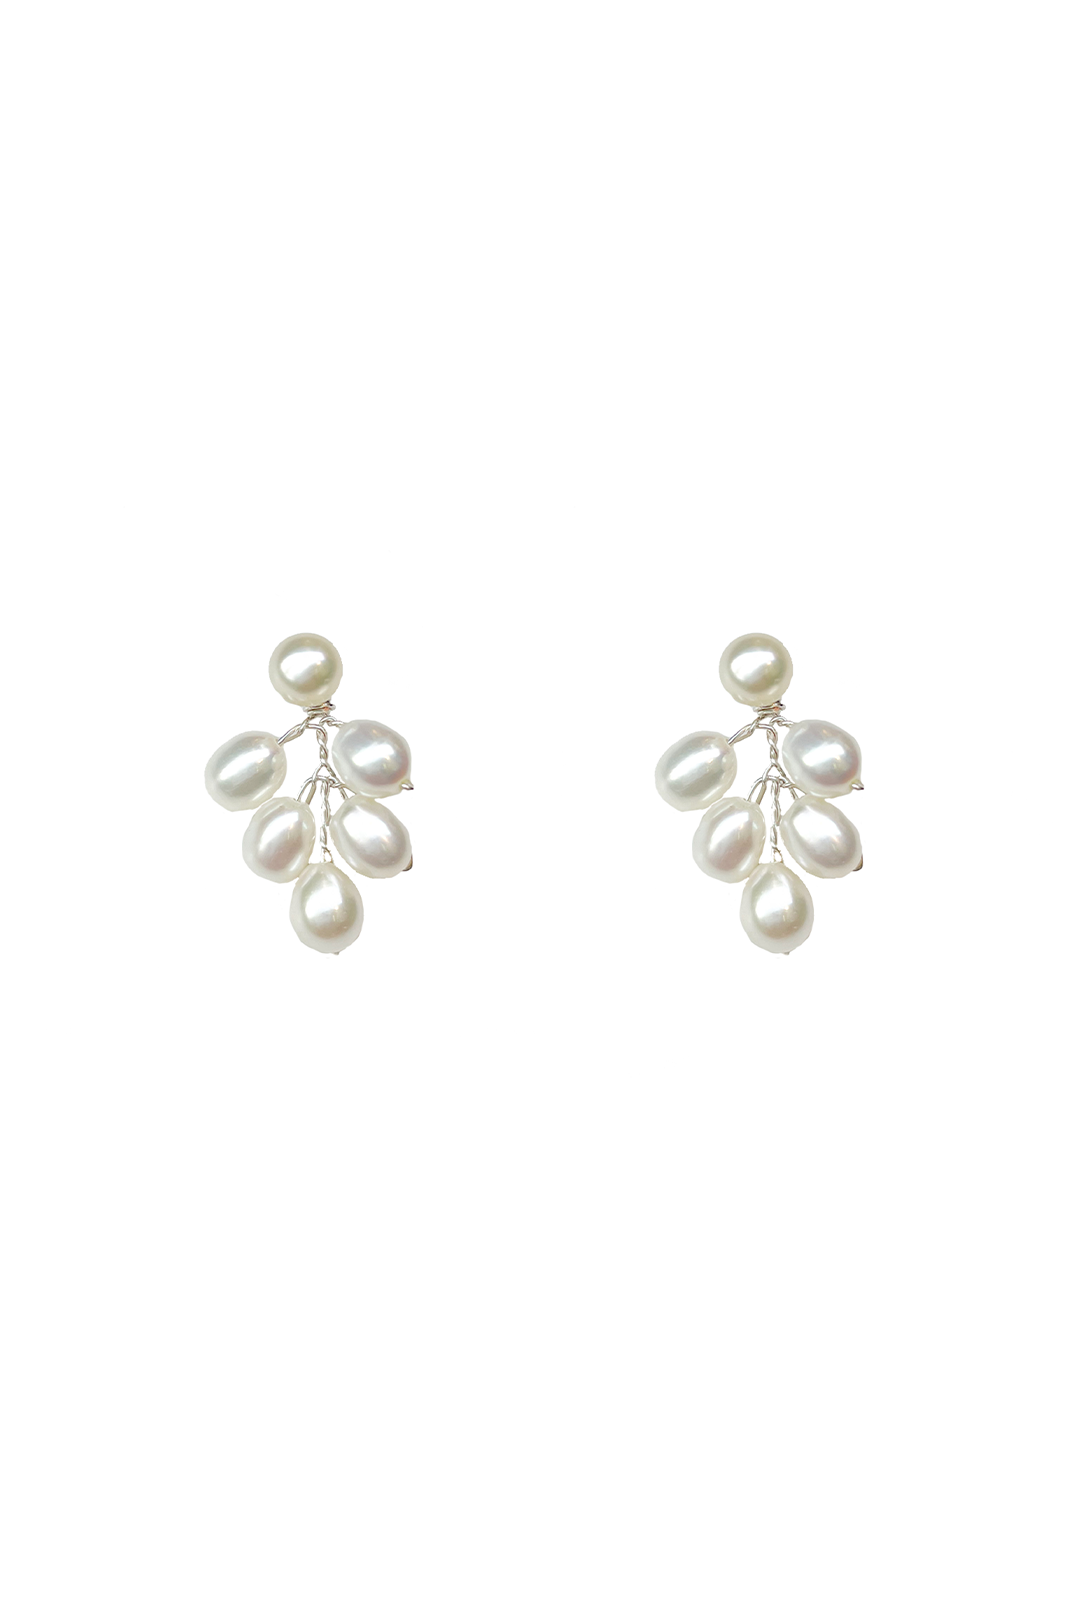 Kensington Grande Pearl Earrings - Silver